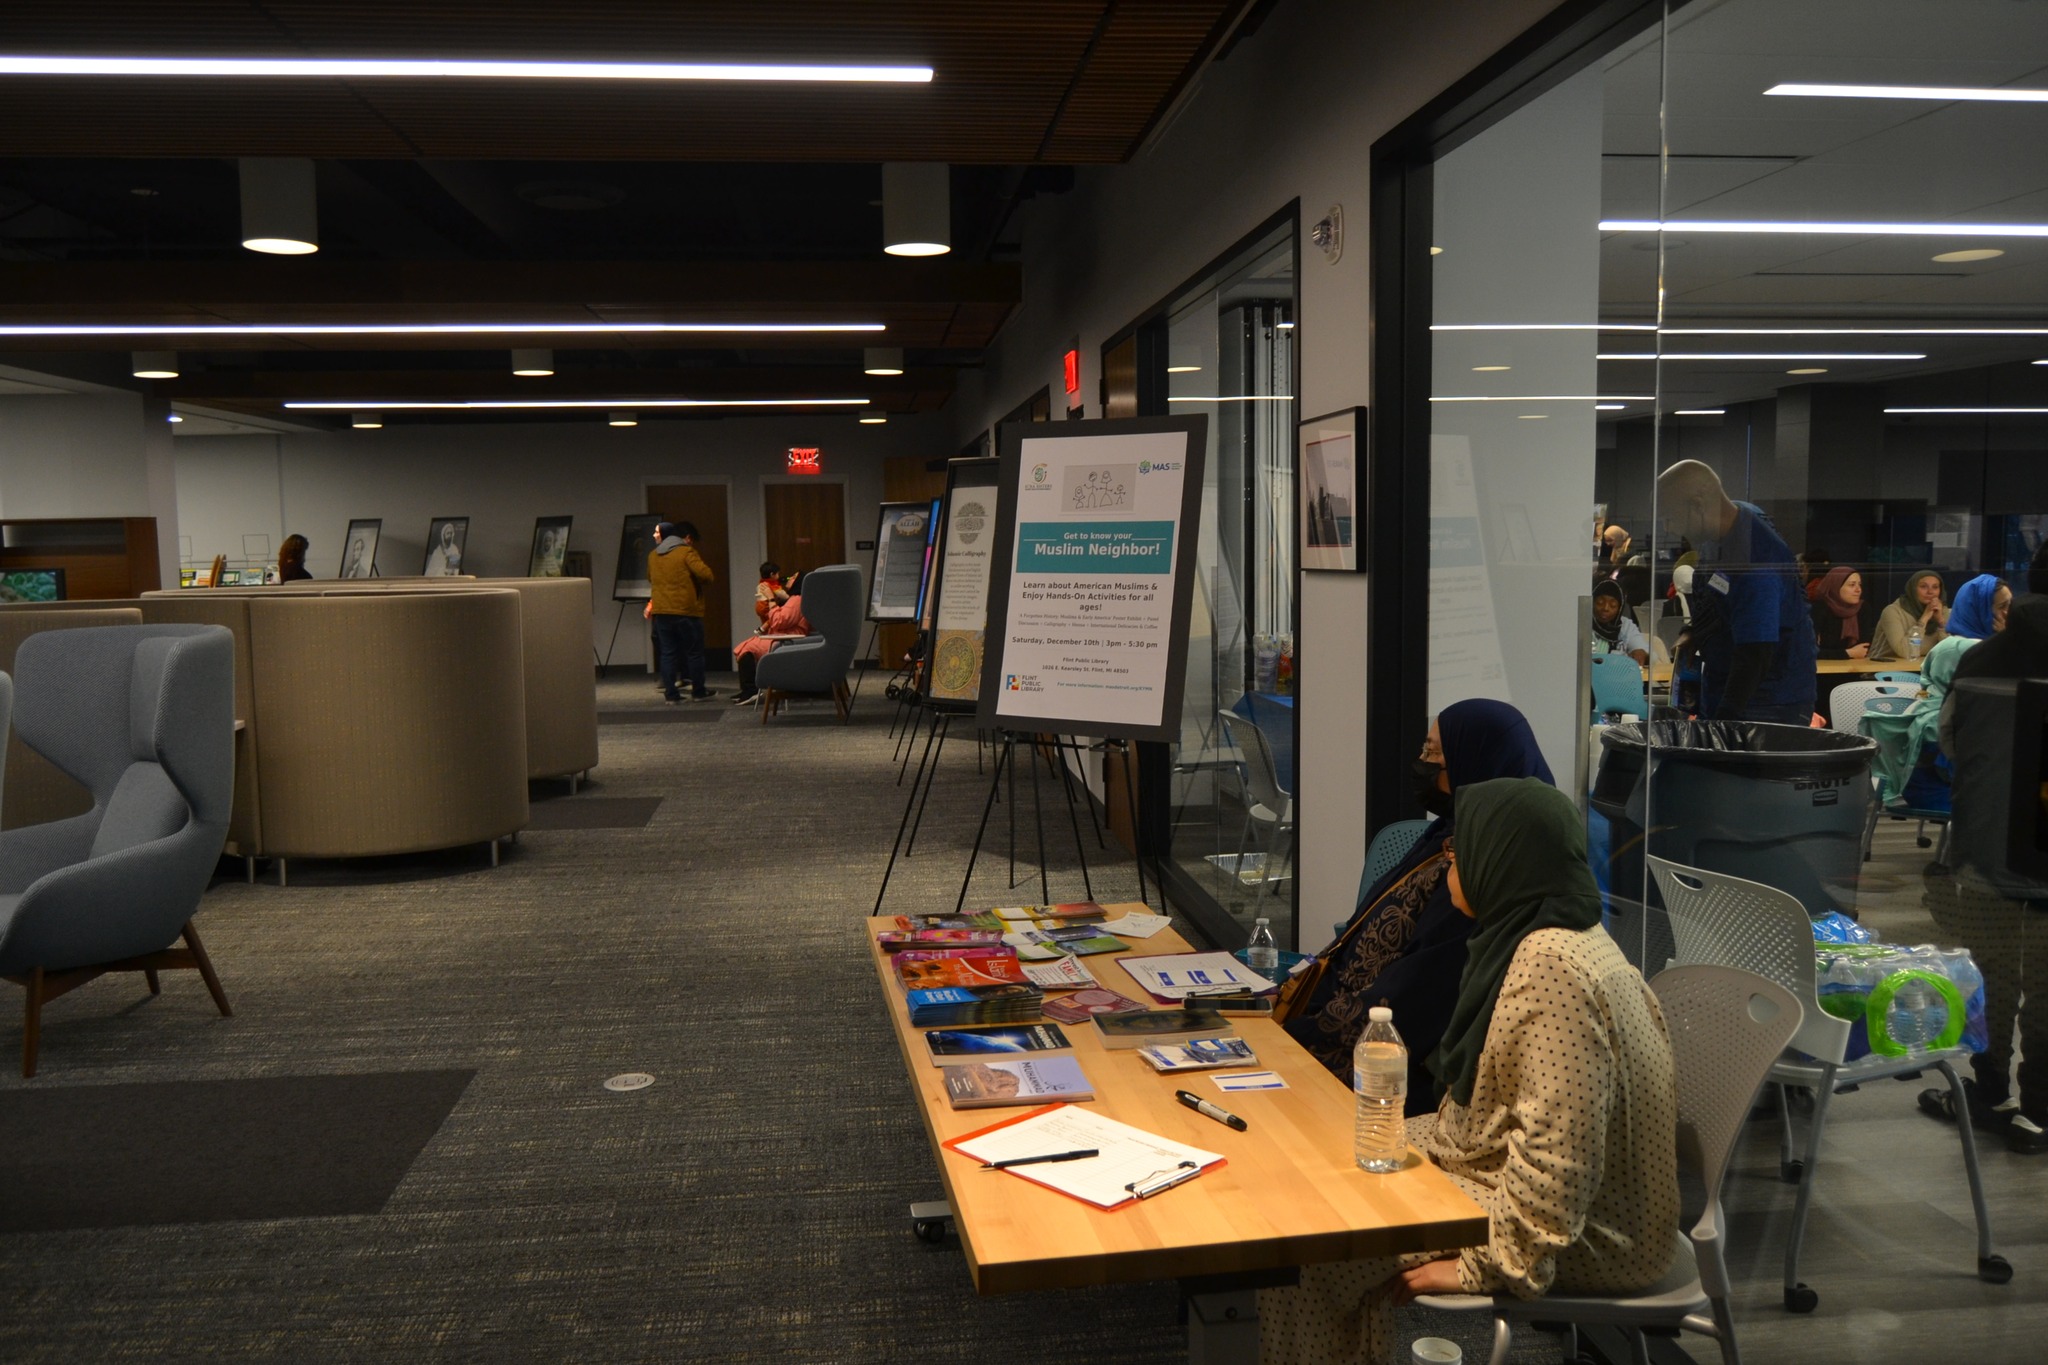 Flint Library Hosts "Meet Your Muslim Neighbor" Event - About Islam